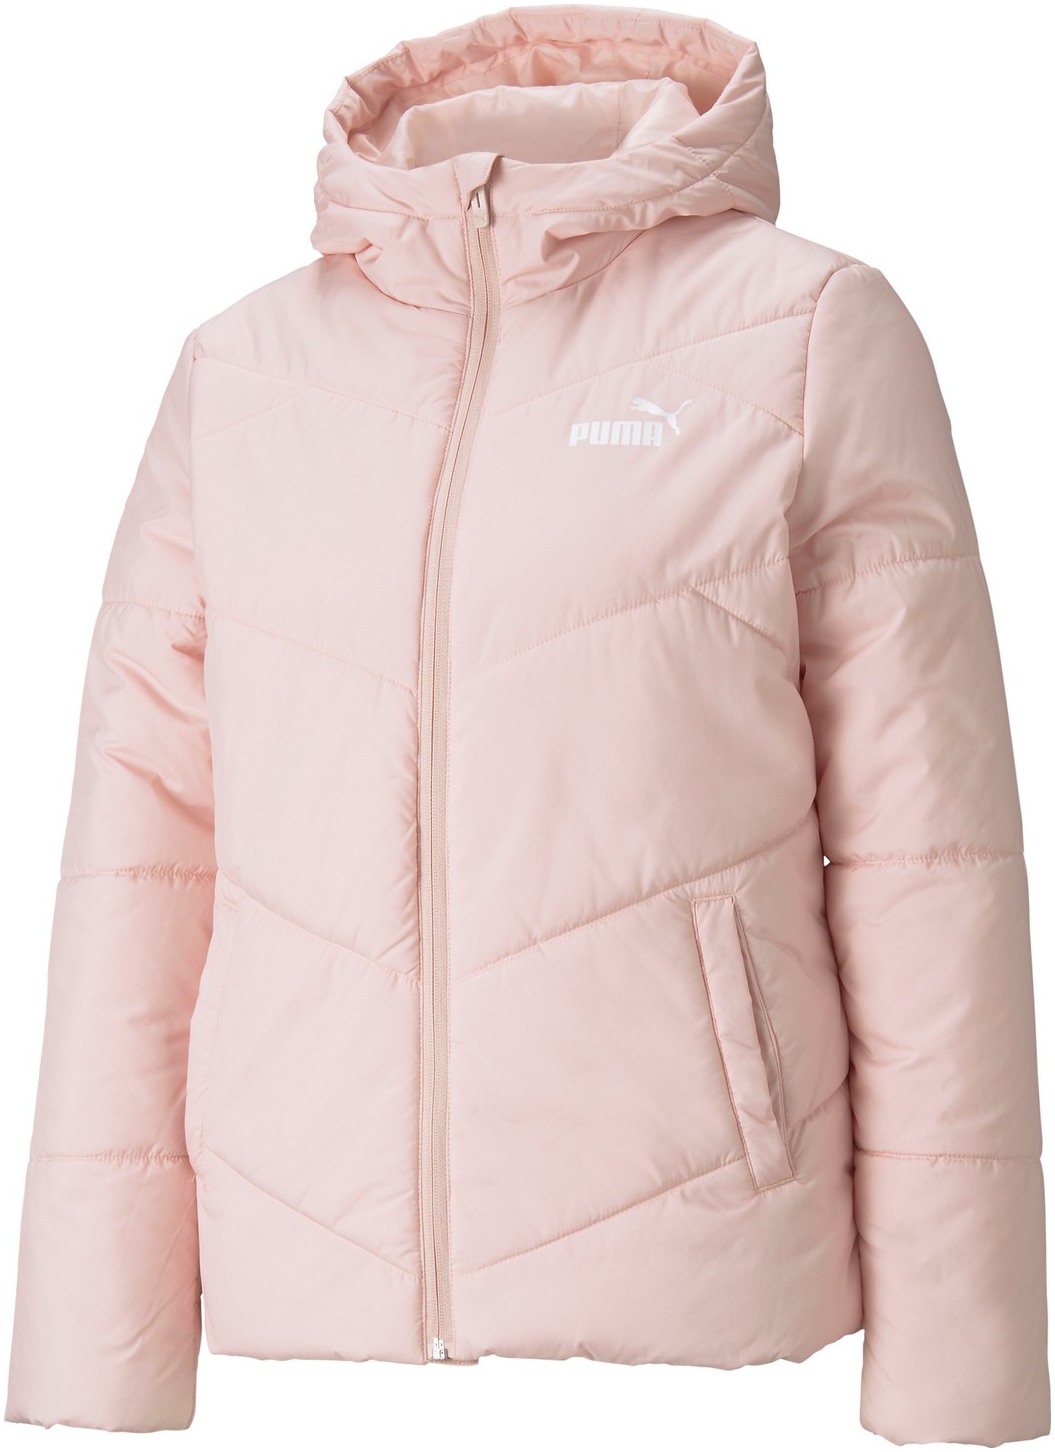 Womens winter jacket JACKET pink AD | W PADDED ESS Puma